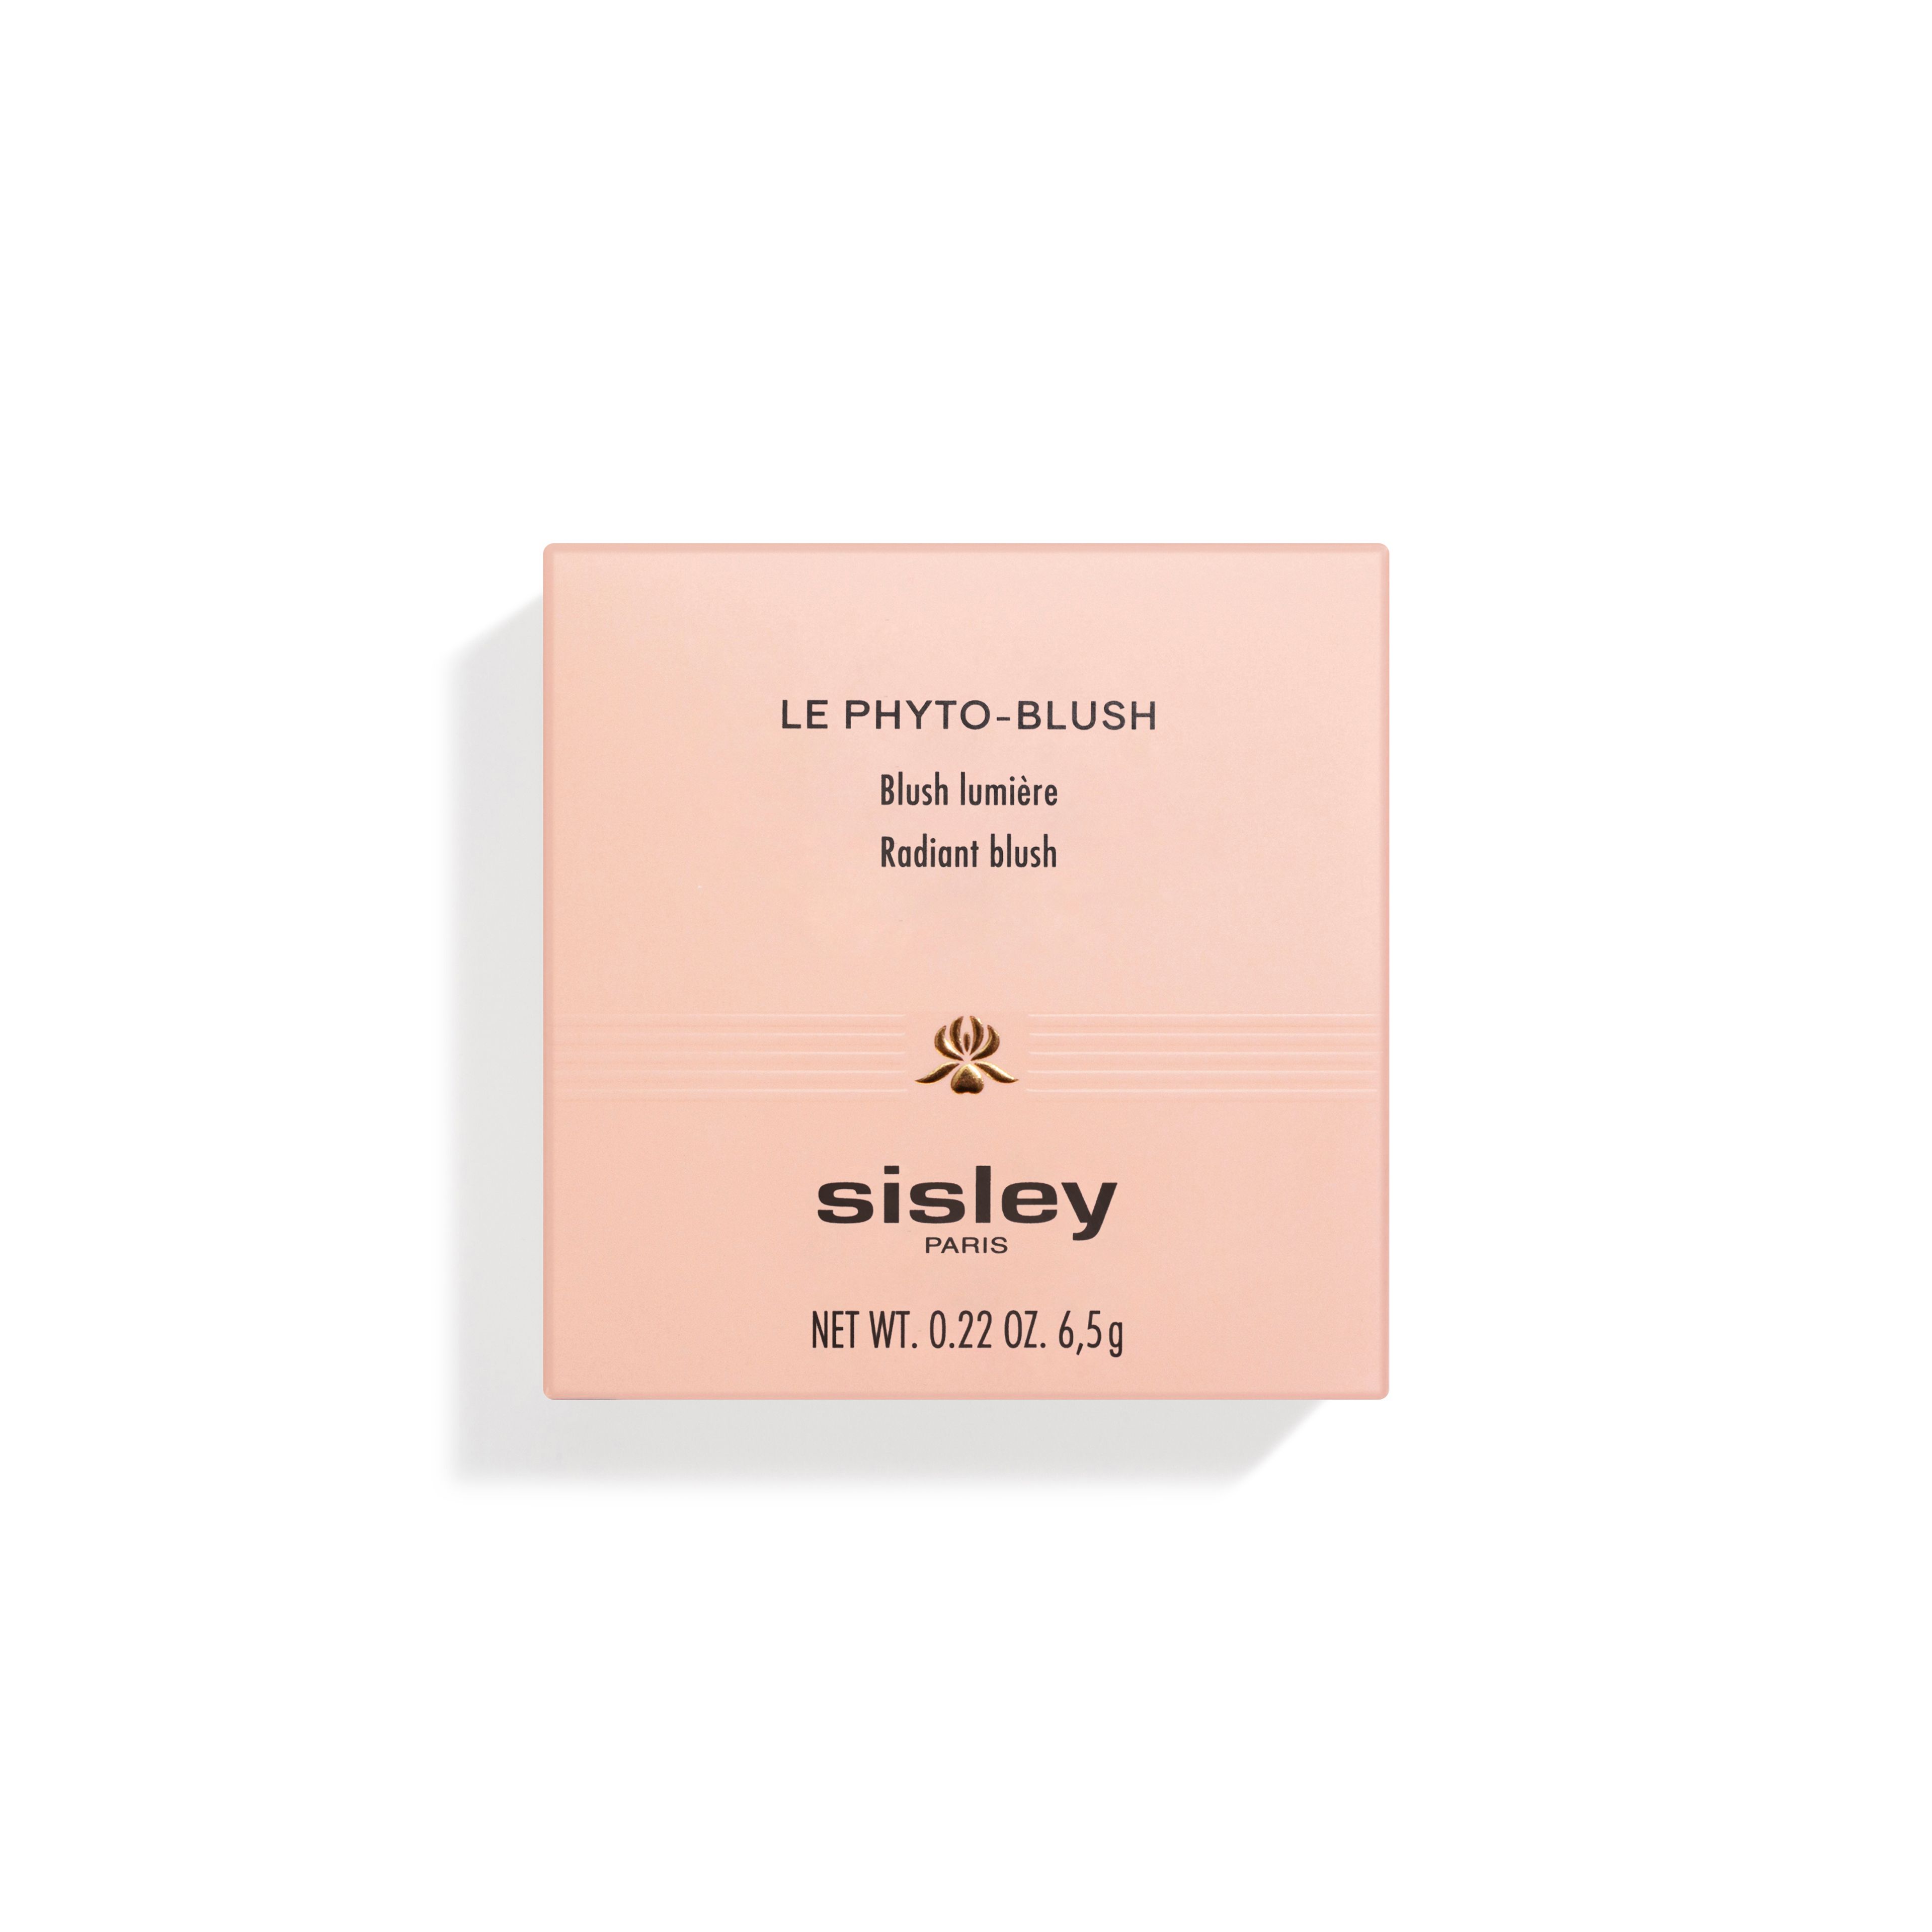 SISLEY Le Phyto-blush 4